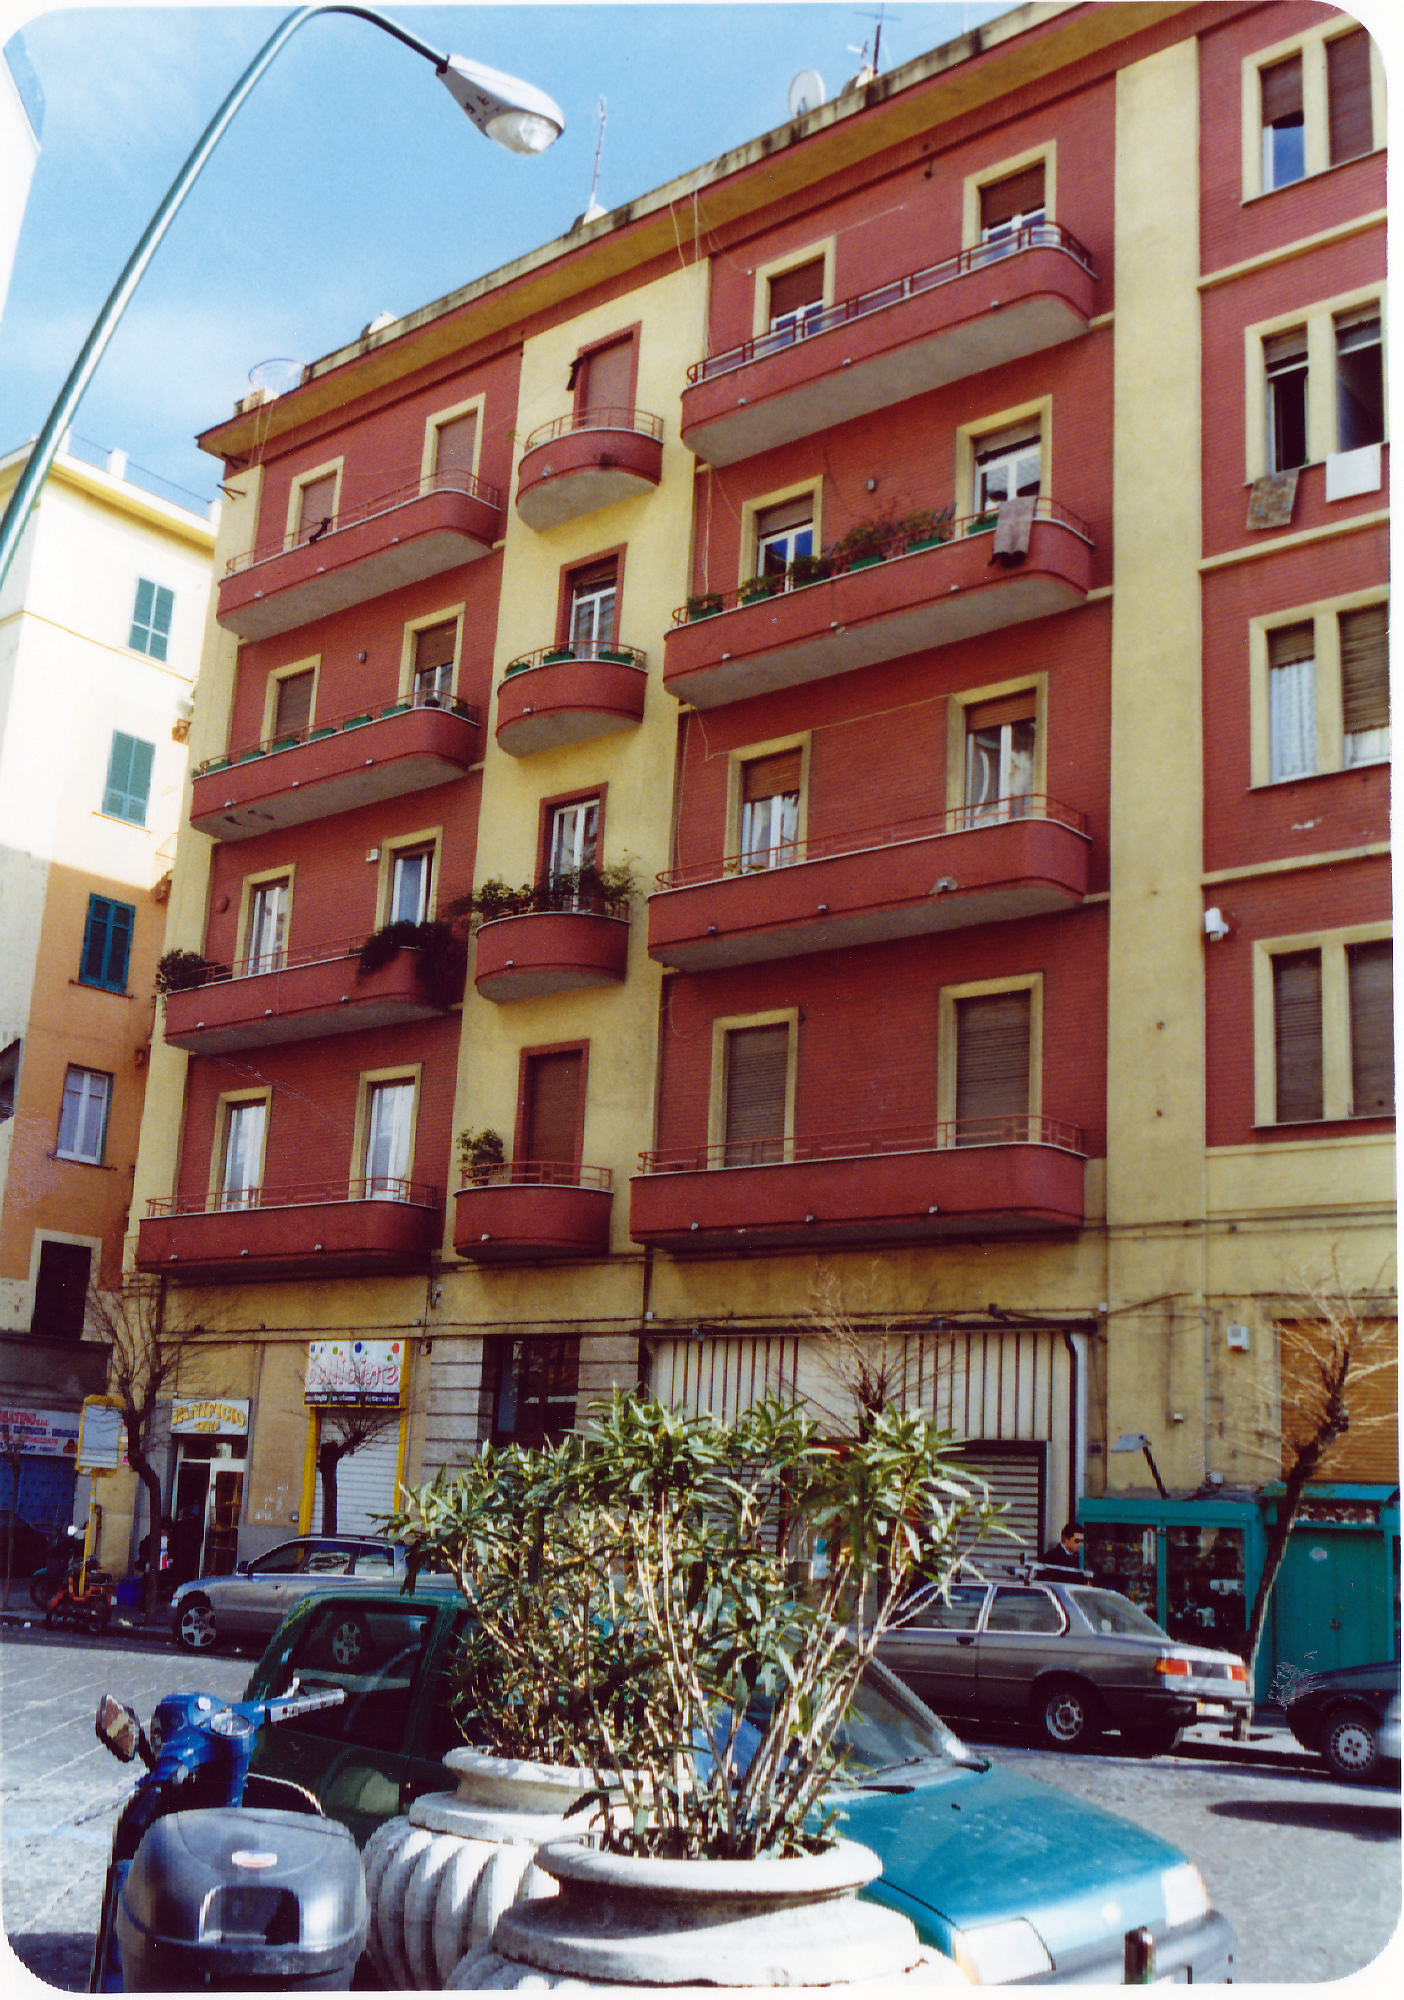 ignota - v.le Michelangelo, 24 (palazzo, residenziale) - Napoli (NA) 